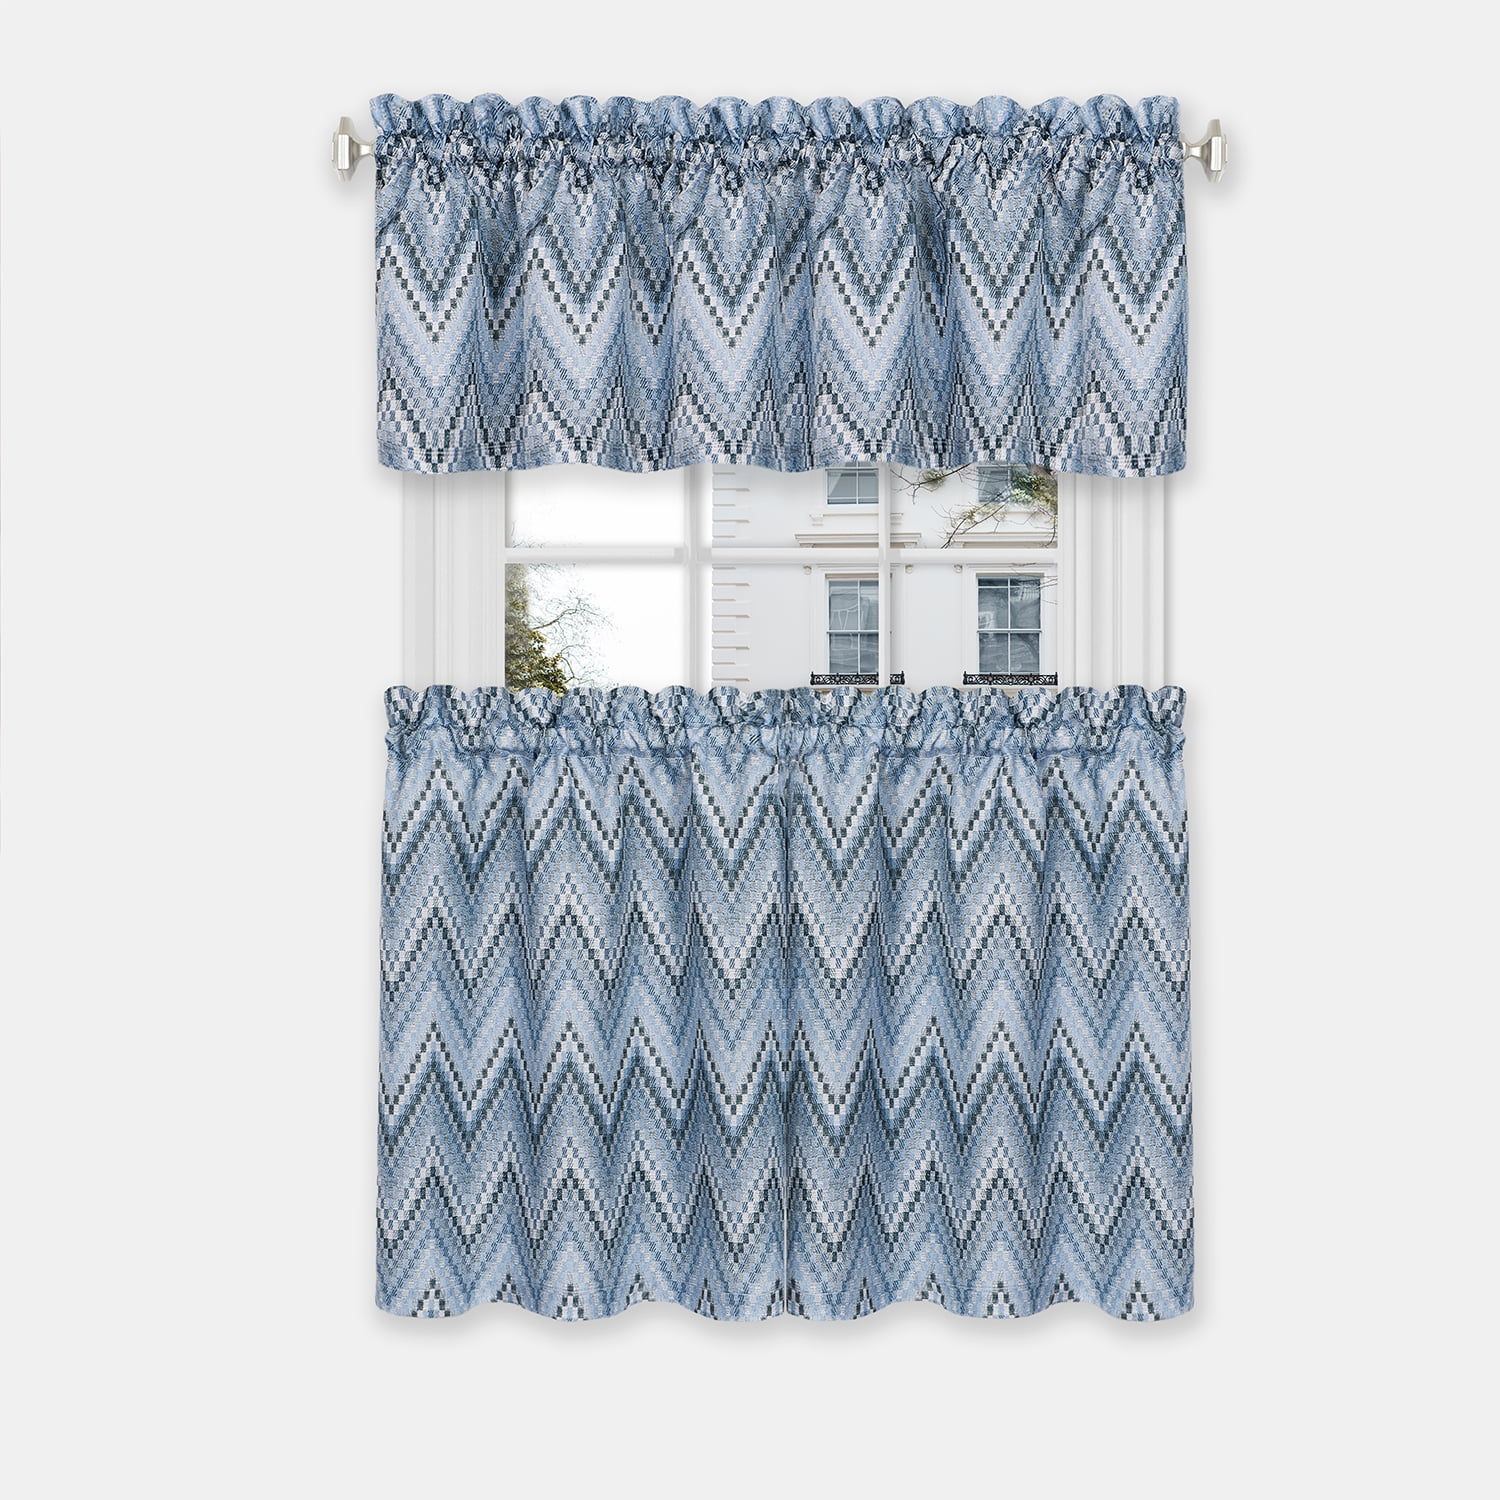 Achim Avtv36ib12 58 X 36 In. Avery Window Curtain Tier & Valance Set, Ice Blue - Pack Of 2